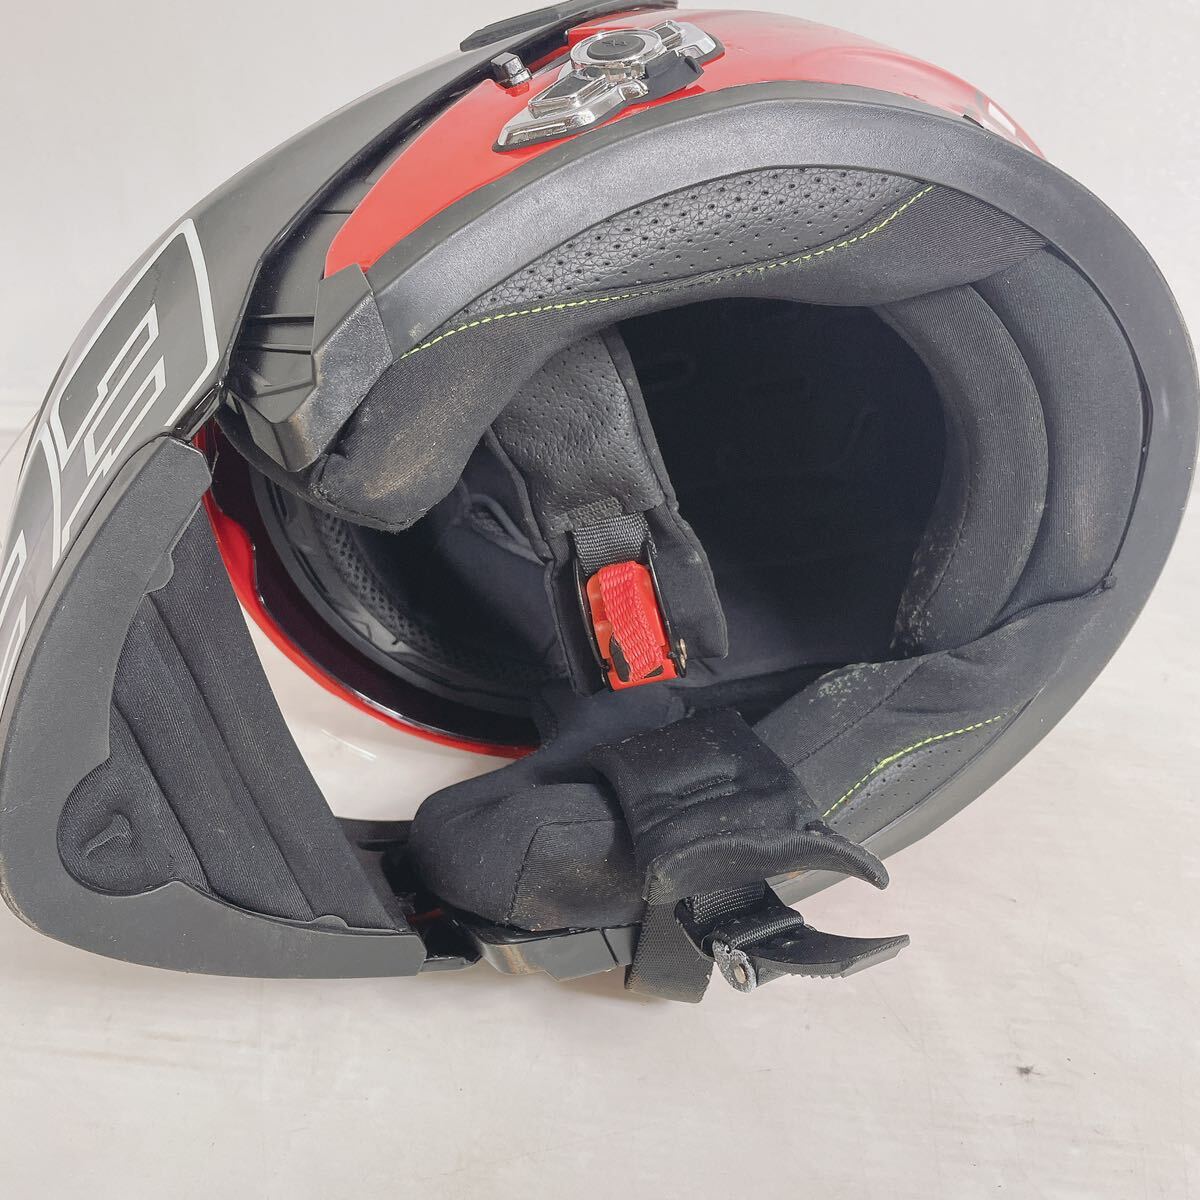 ◆Jiekai フルフェイスヘルメット JK-902 システムヘルメット ジェットヘルメット XXL size63〜64◆M3-K_画像7